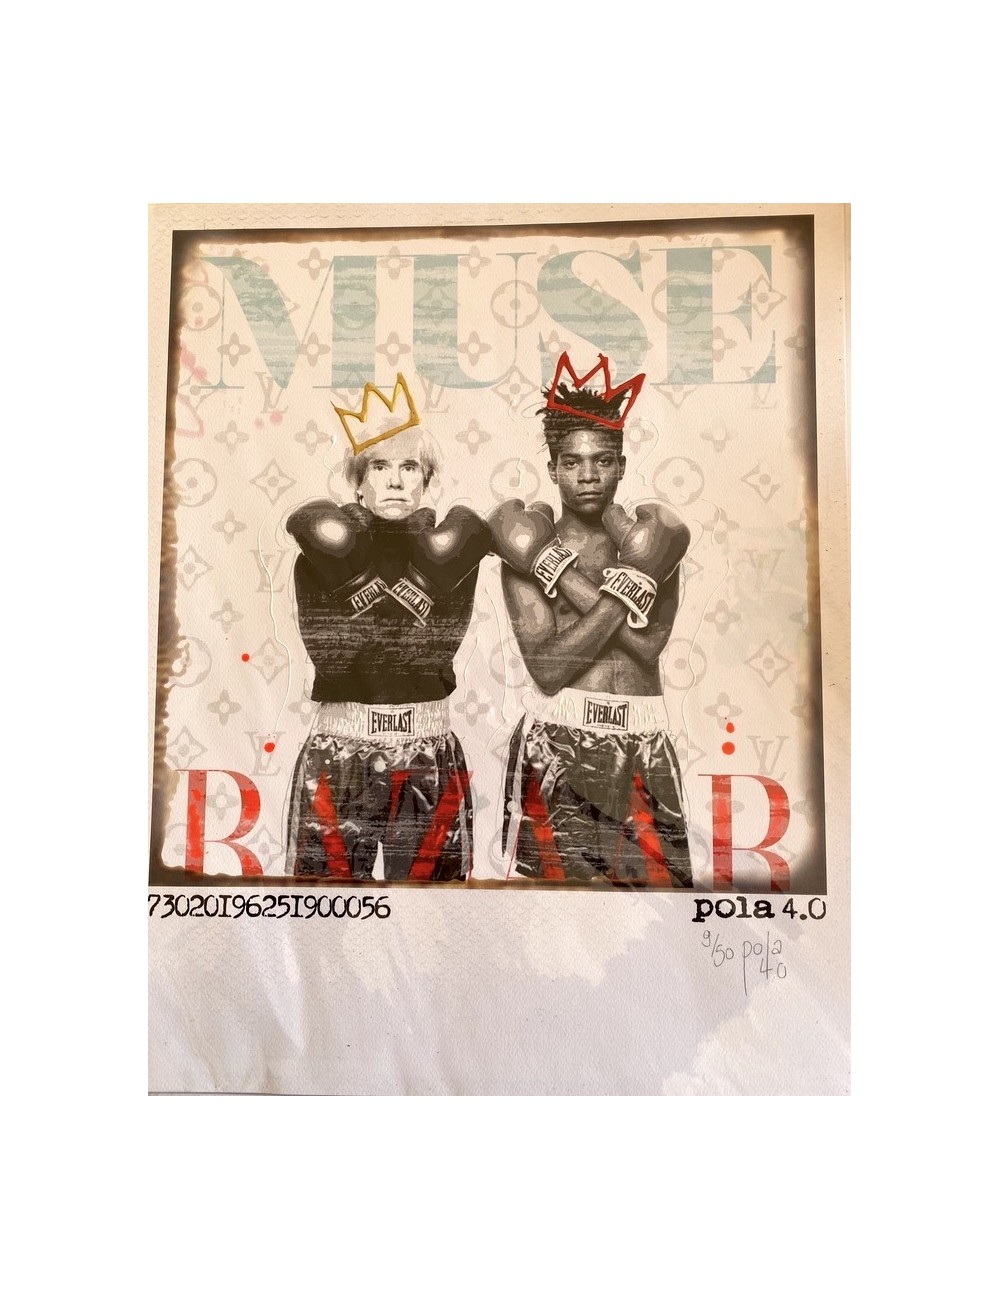 Edition rehaussée Andy Warhol et Basquiat n°9/50 de Pola 4.0